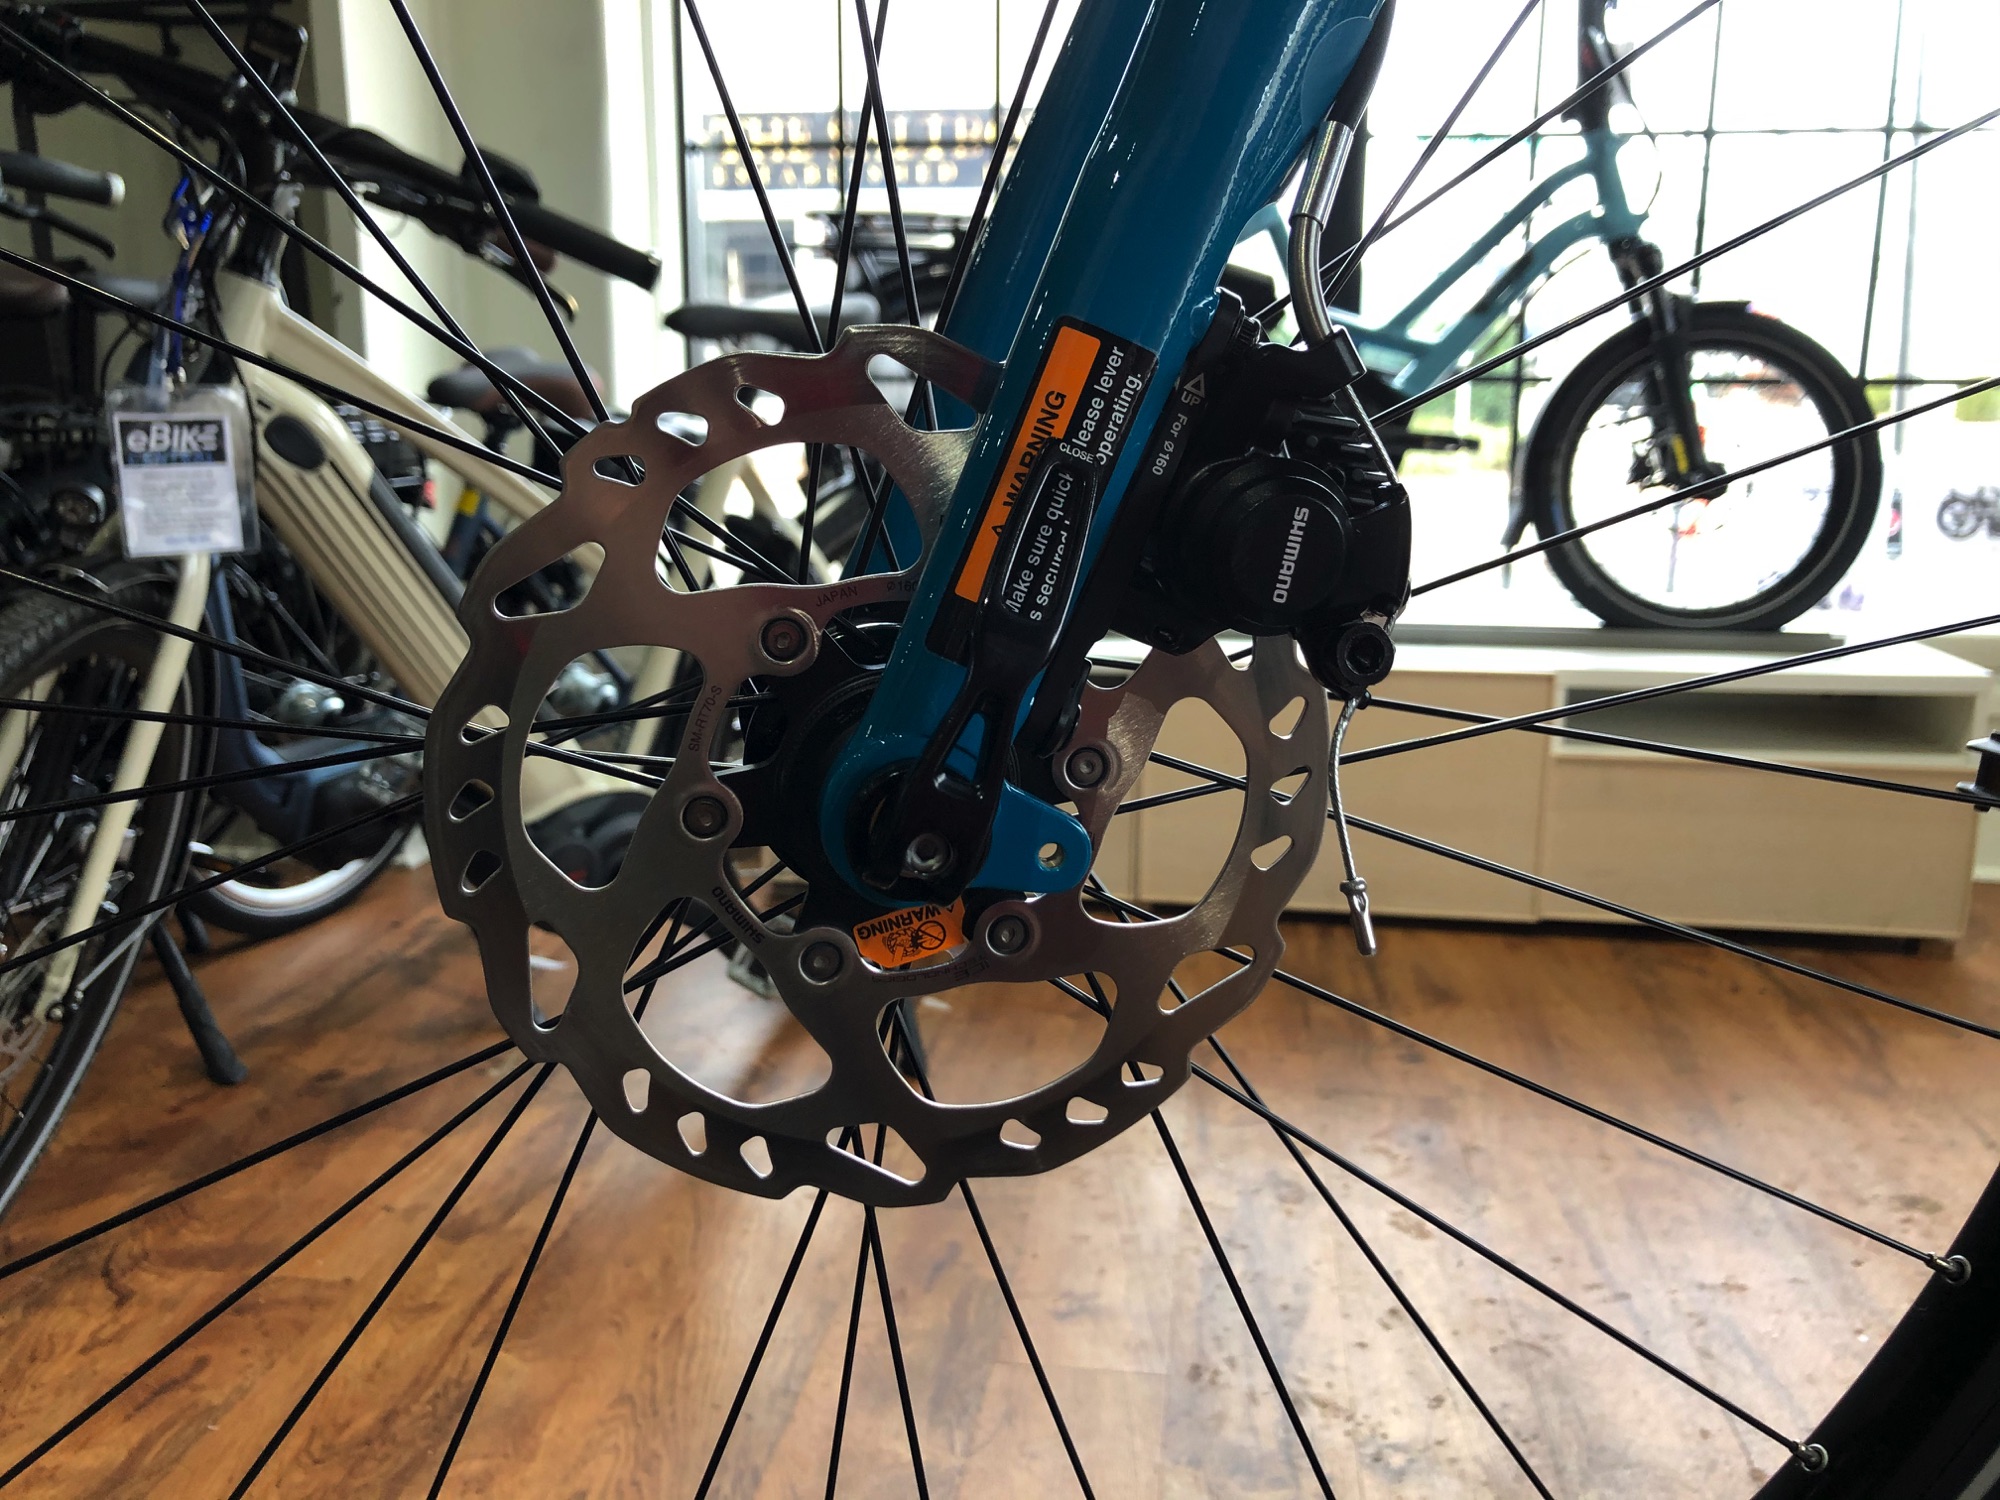 Yamaha CrossCore pedal assist bicycle